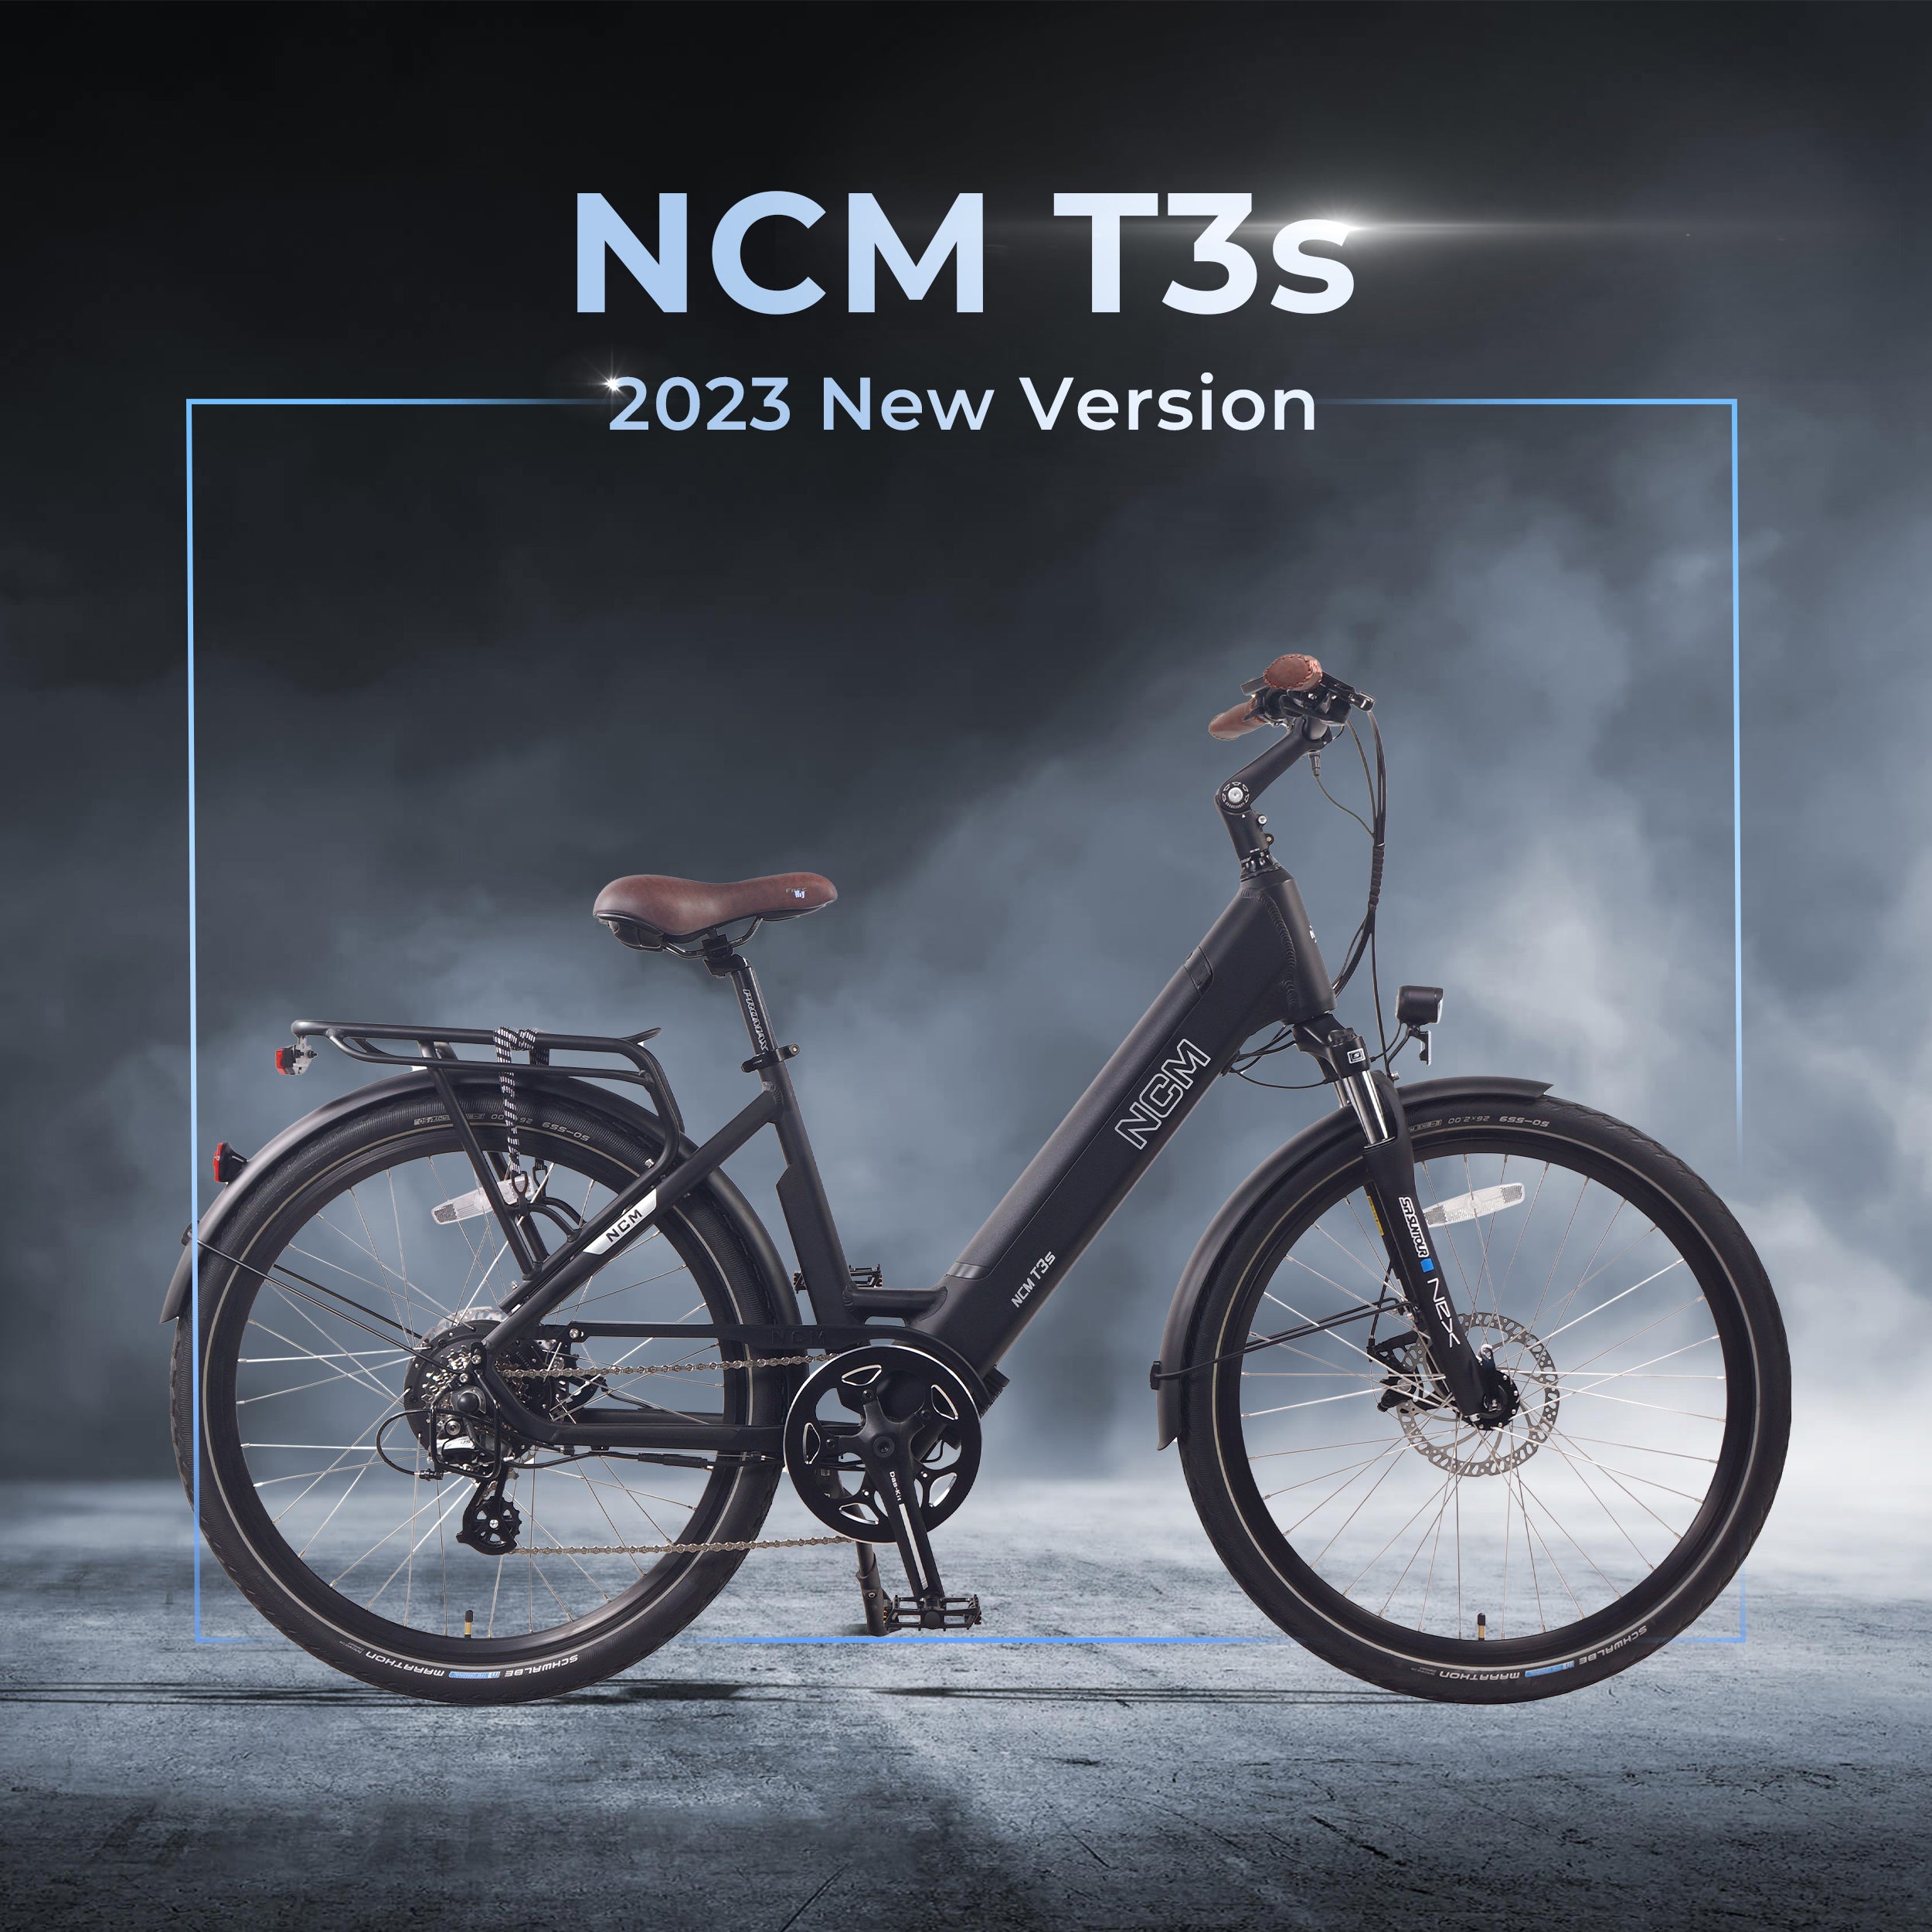 NCM T3s - 2023 New Version